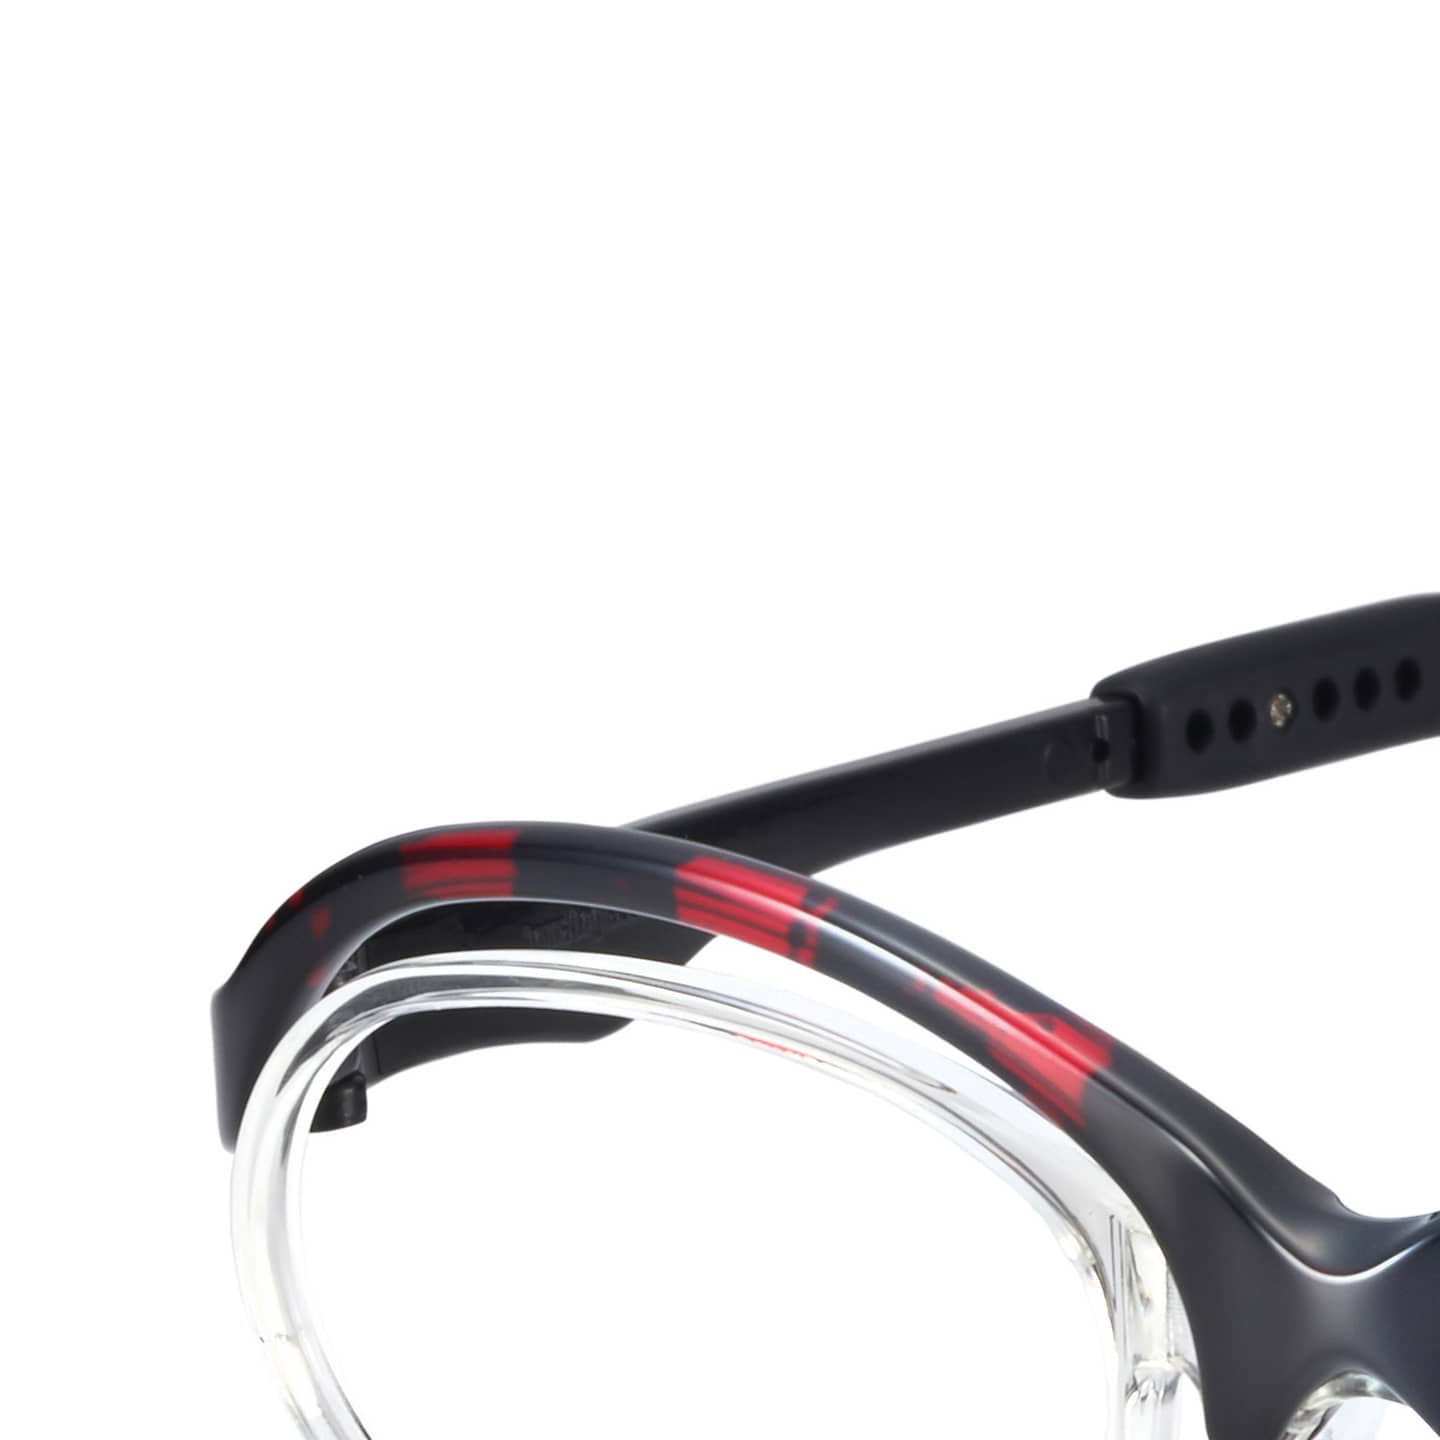 #tomatoglasses factory

We make #kidsframes #babyframes #kidsglasses #babyglasses #eyeglasses #eyewear # childrenseyewear # childrensglasses #opticalframe #specialized #kids #baby #young #glasses